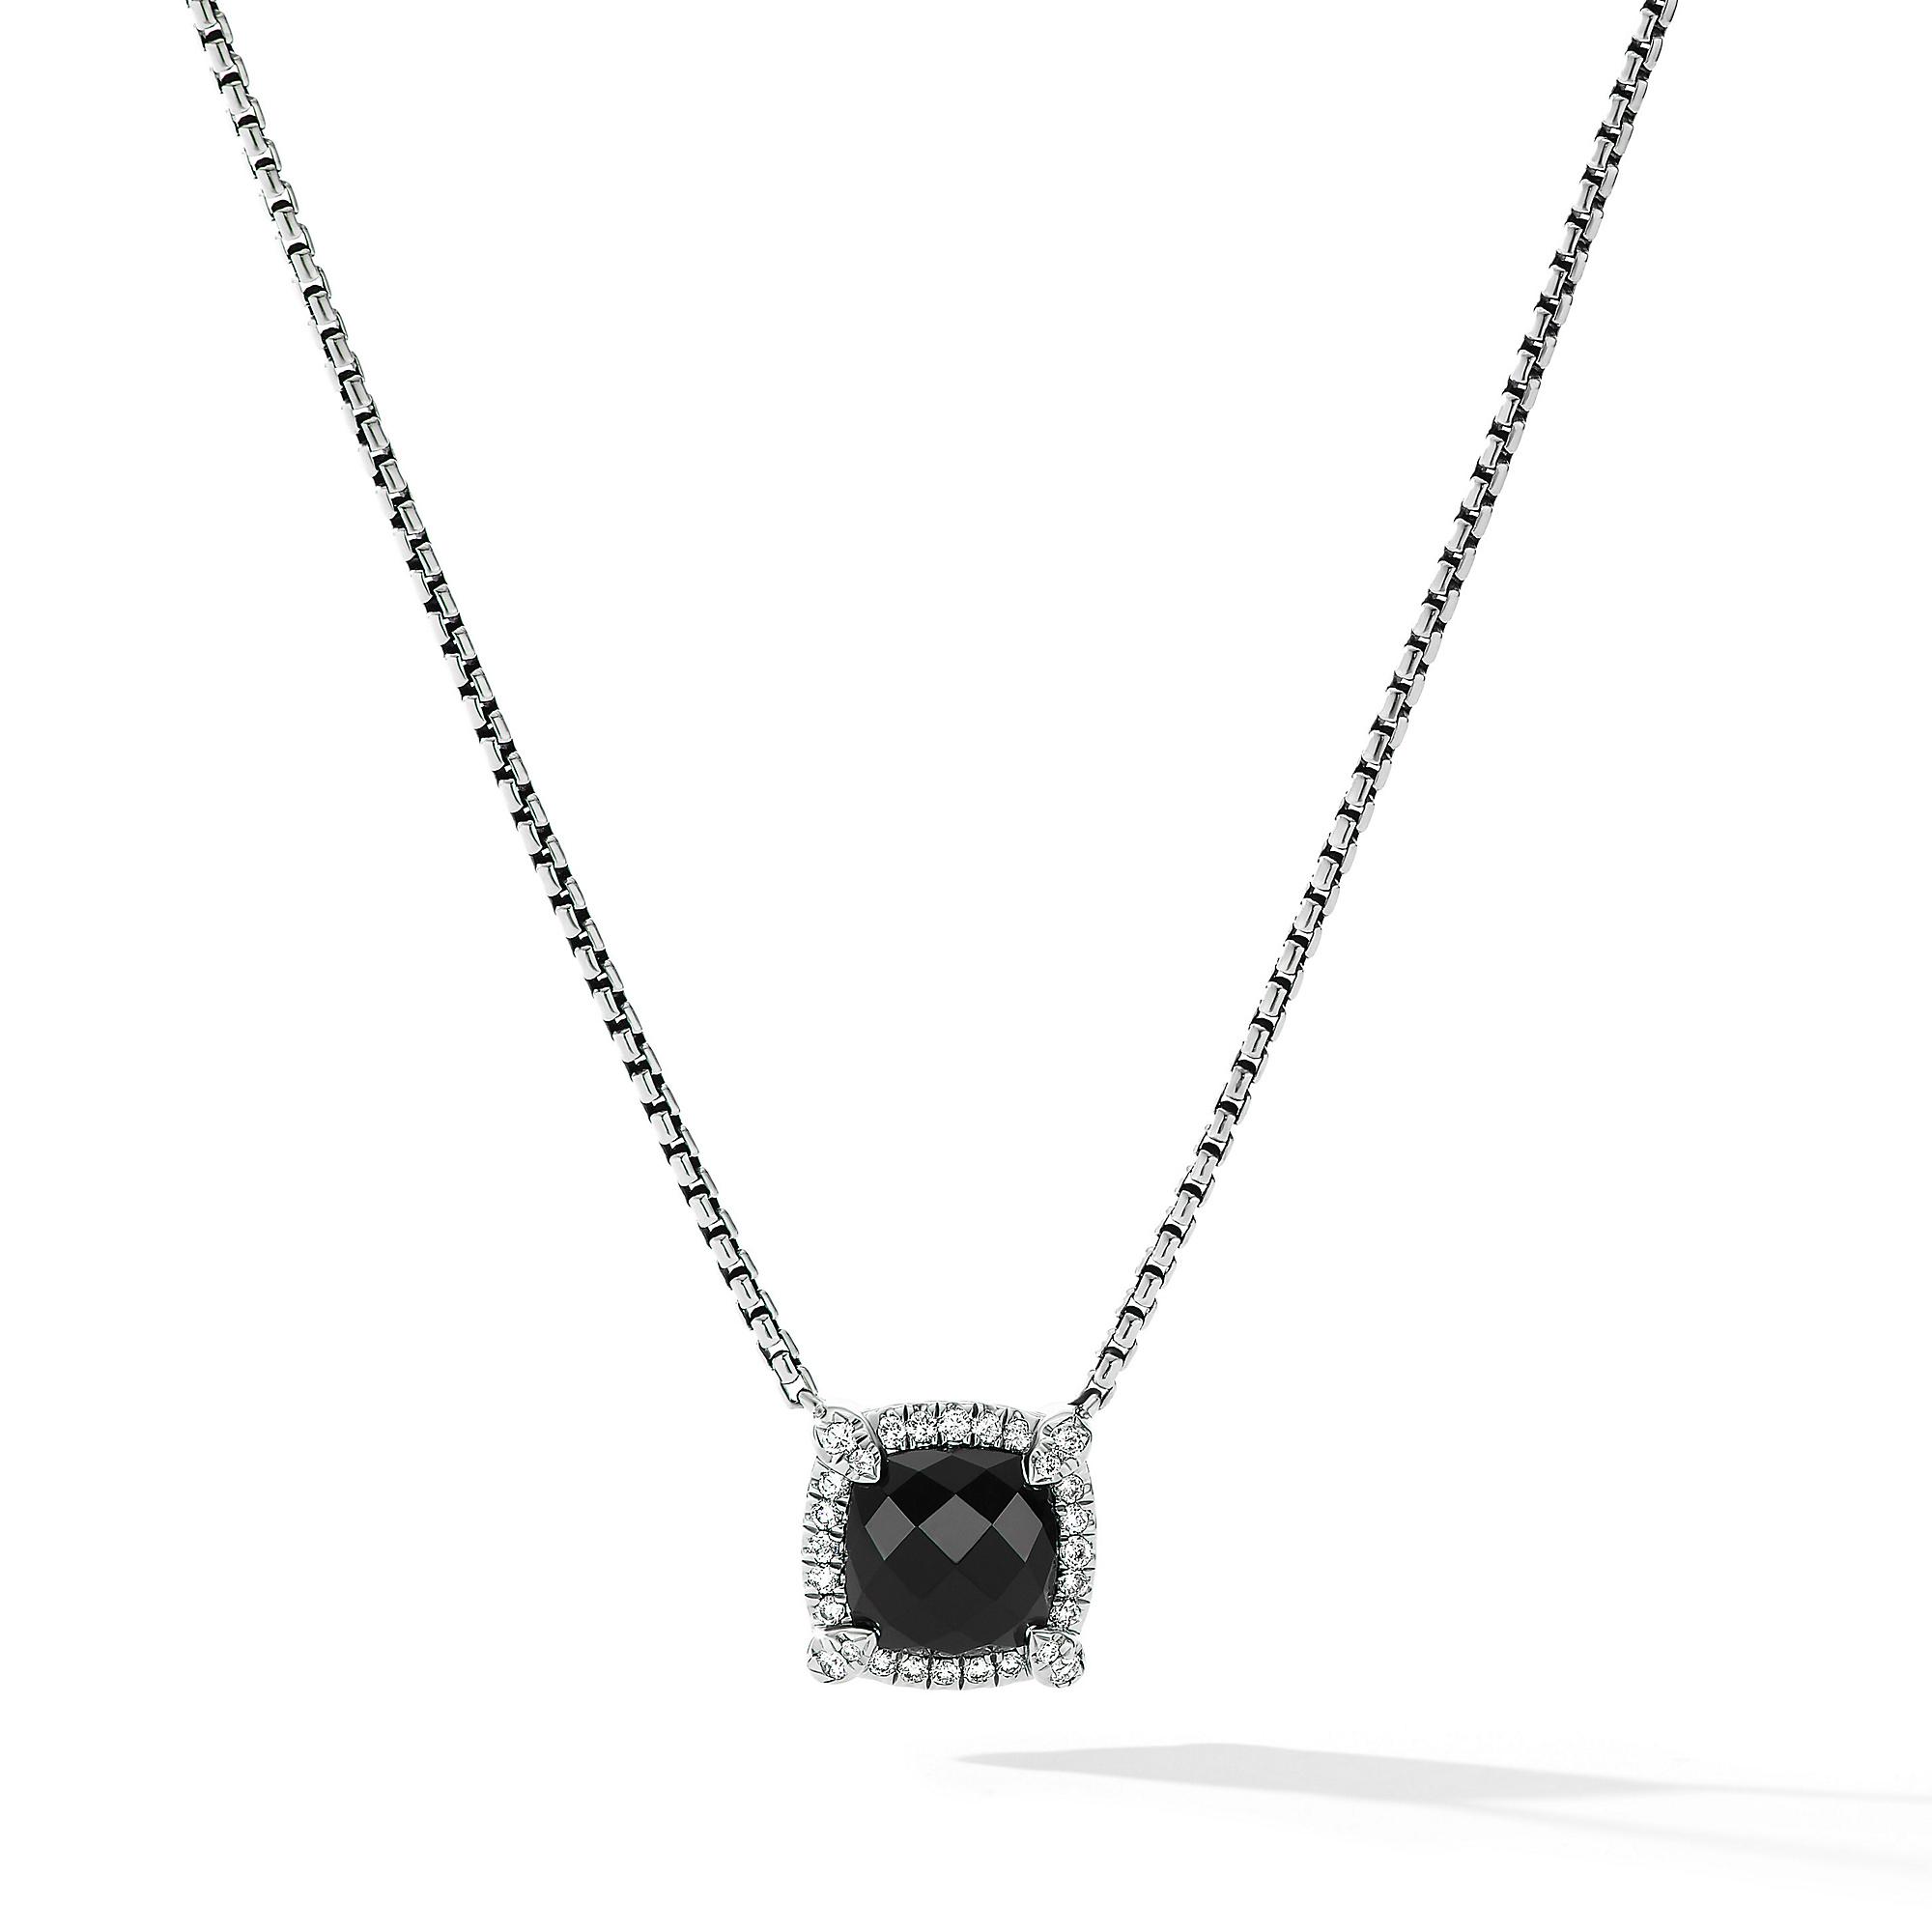 David Yurman Petite Chatelaine Pave Bezel Pendant Necklace with Black Onyx and Diamonds